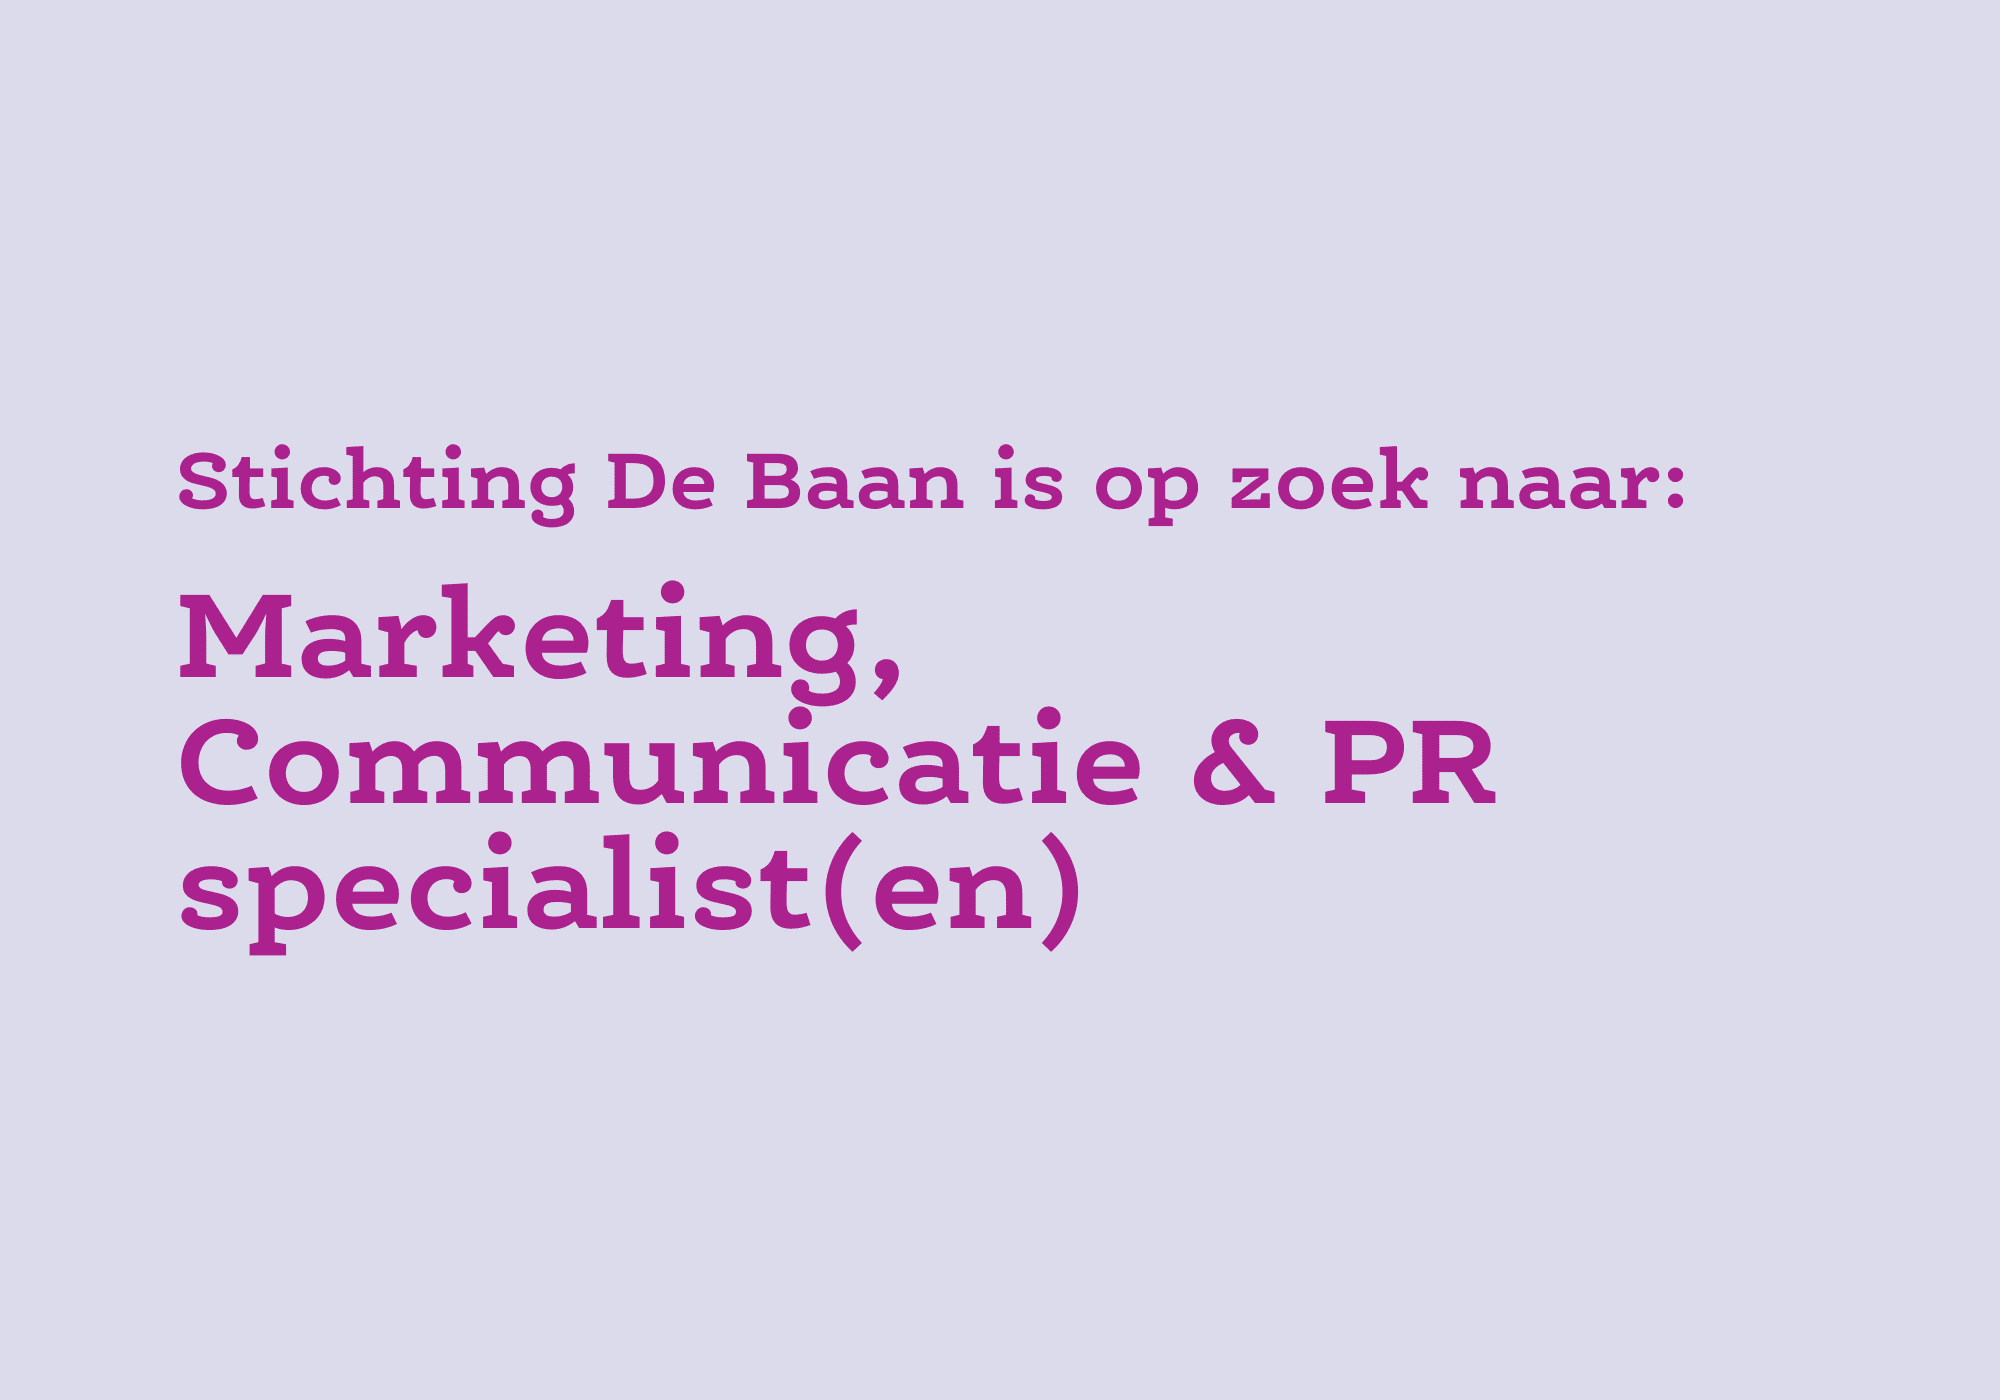 Marketing, Communicatie & PR specialist(en)